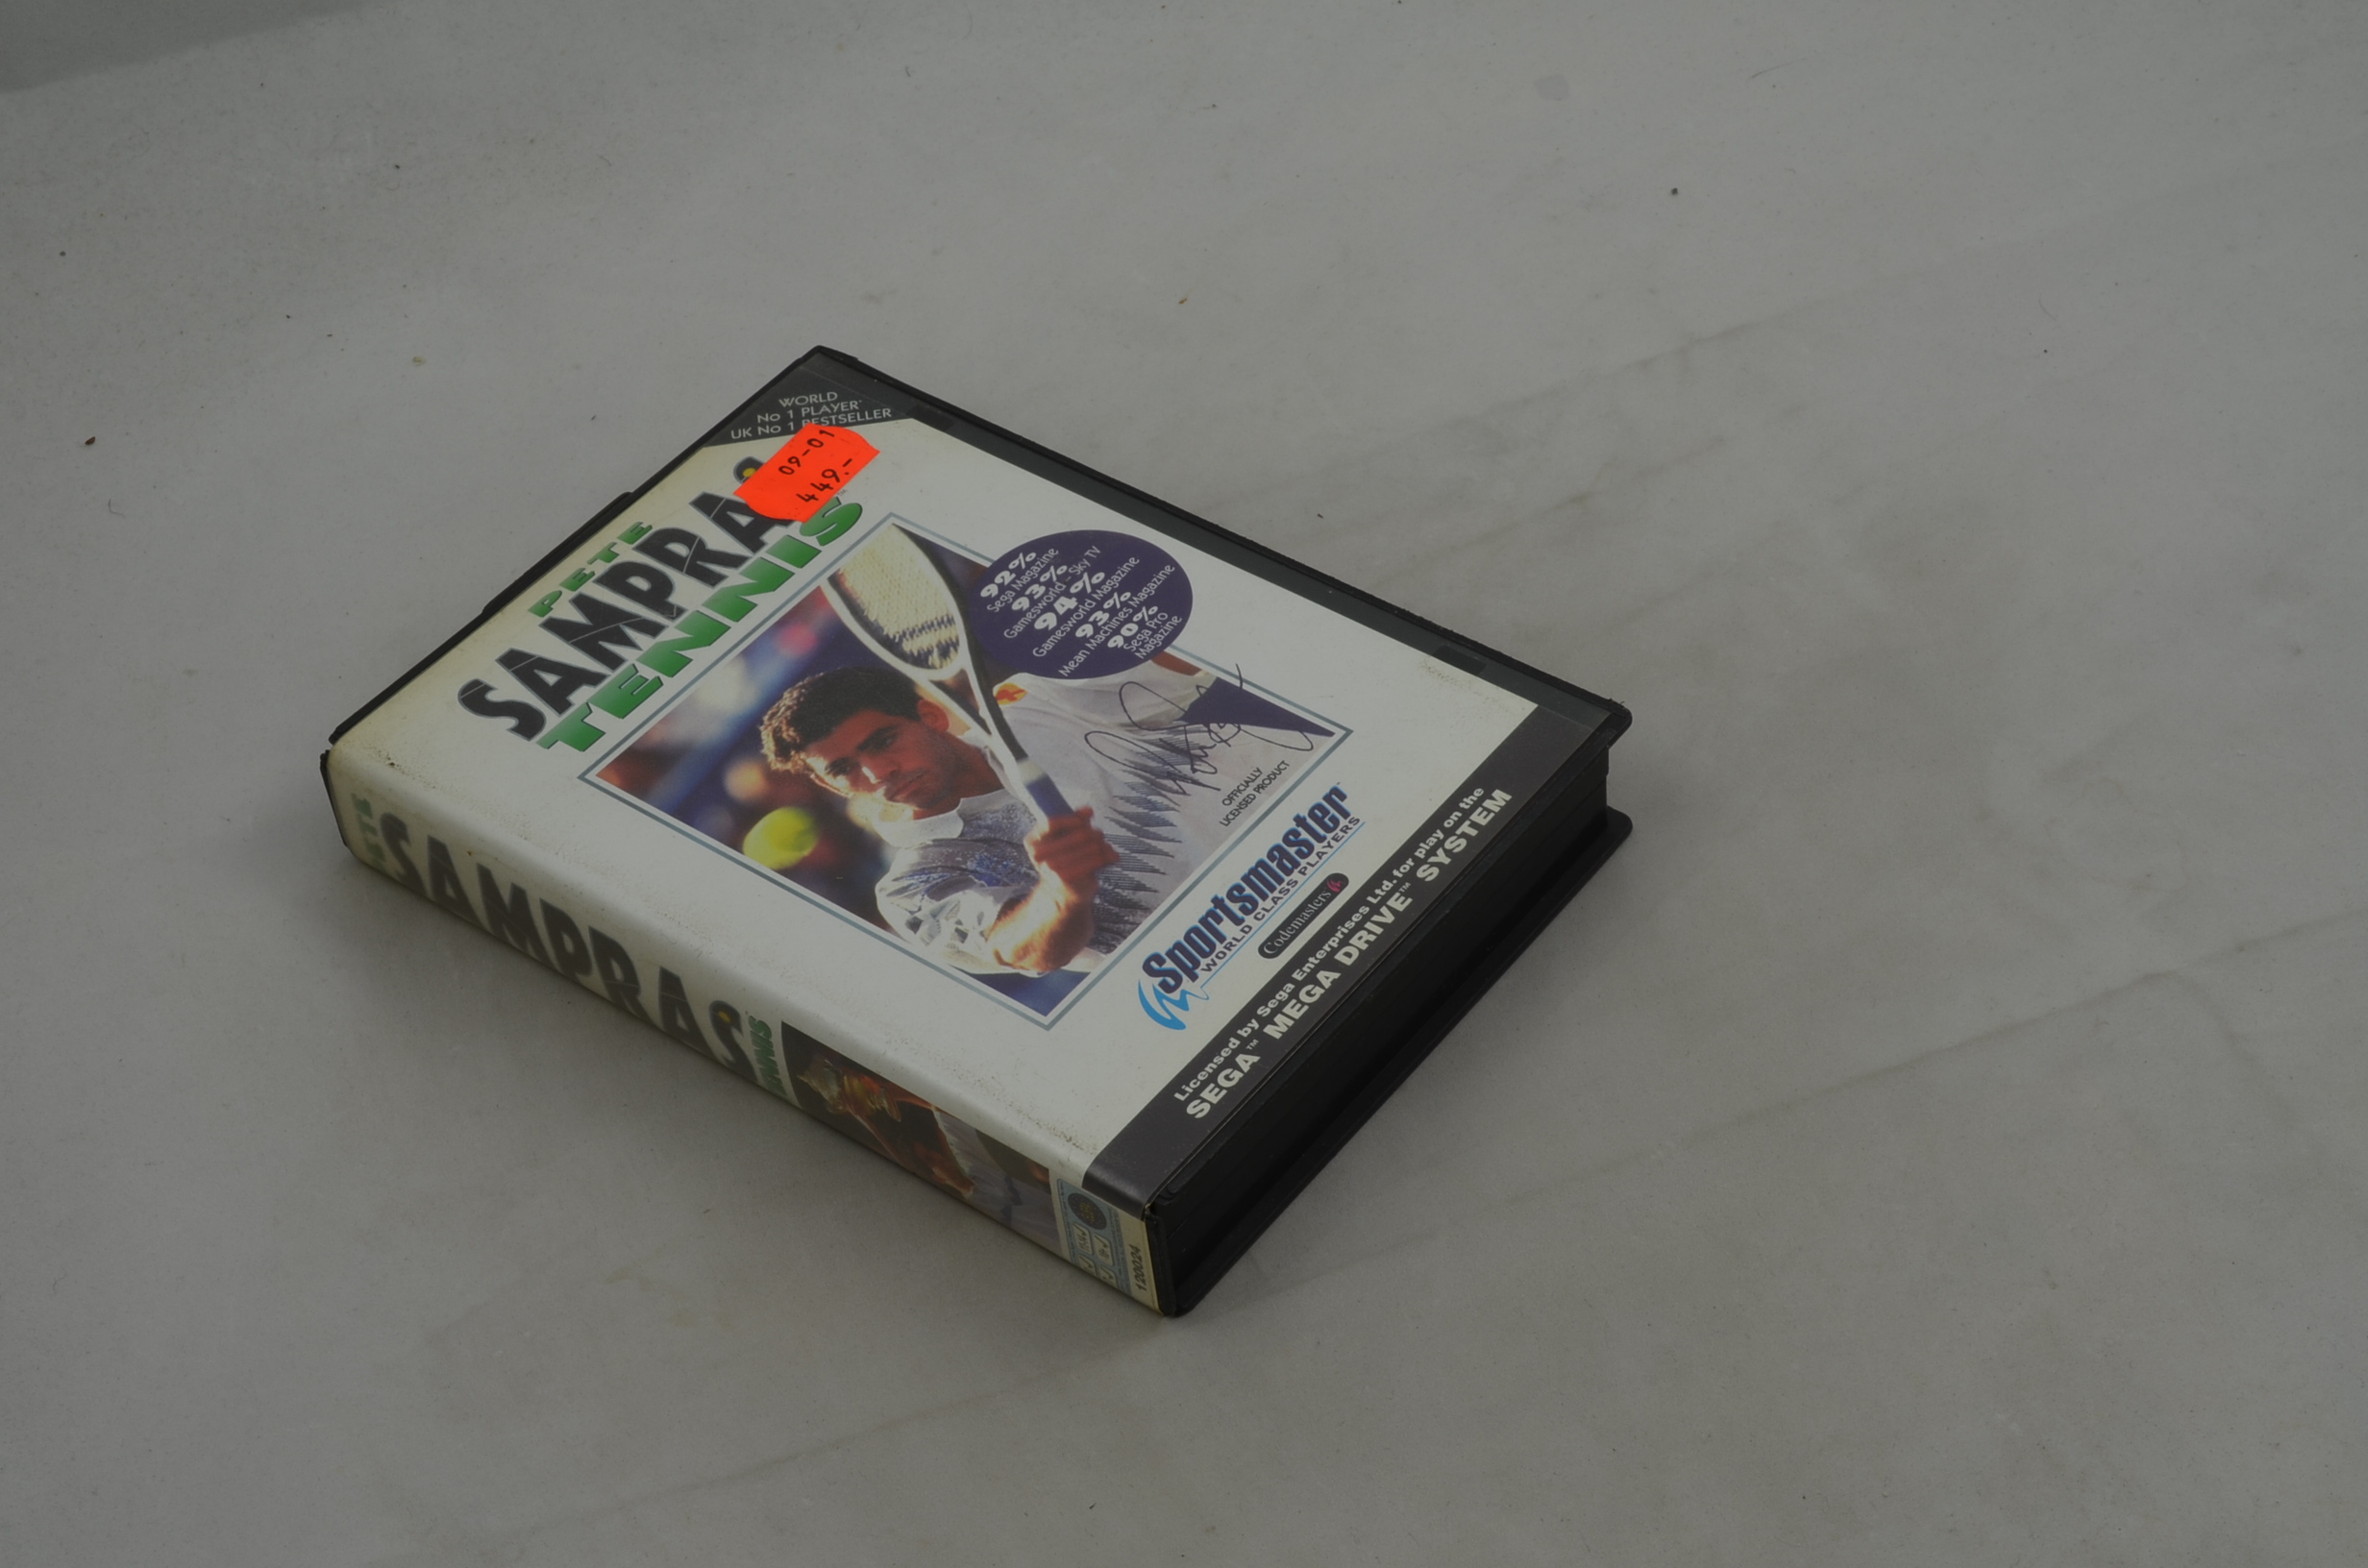 Produktbild von Pete Sampras Tennis Sega Mega Drive Spiel CIB (gut)